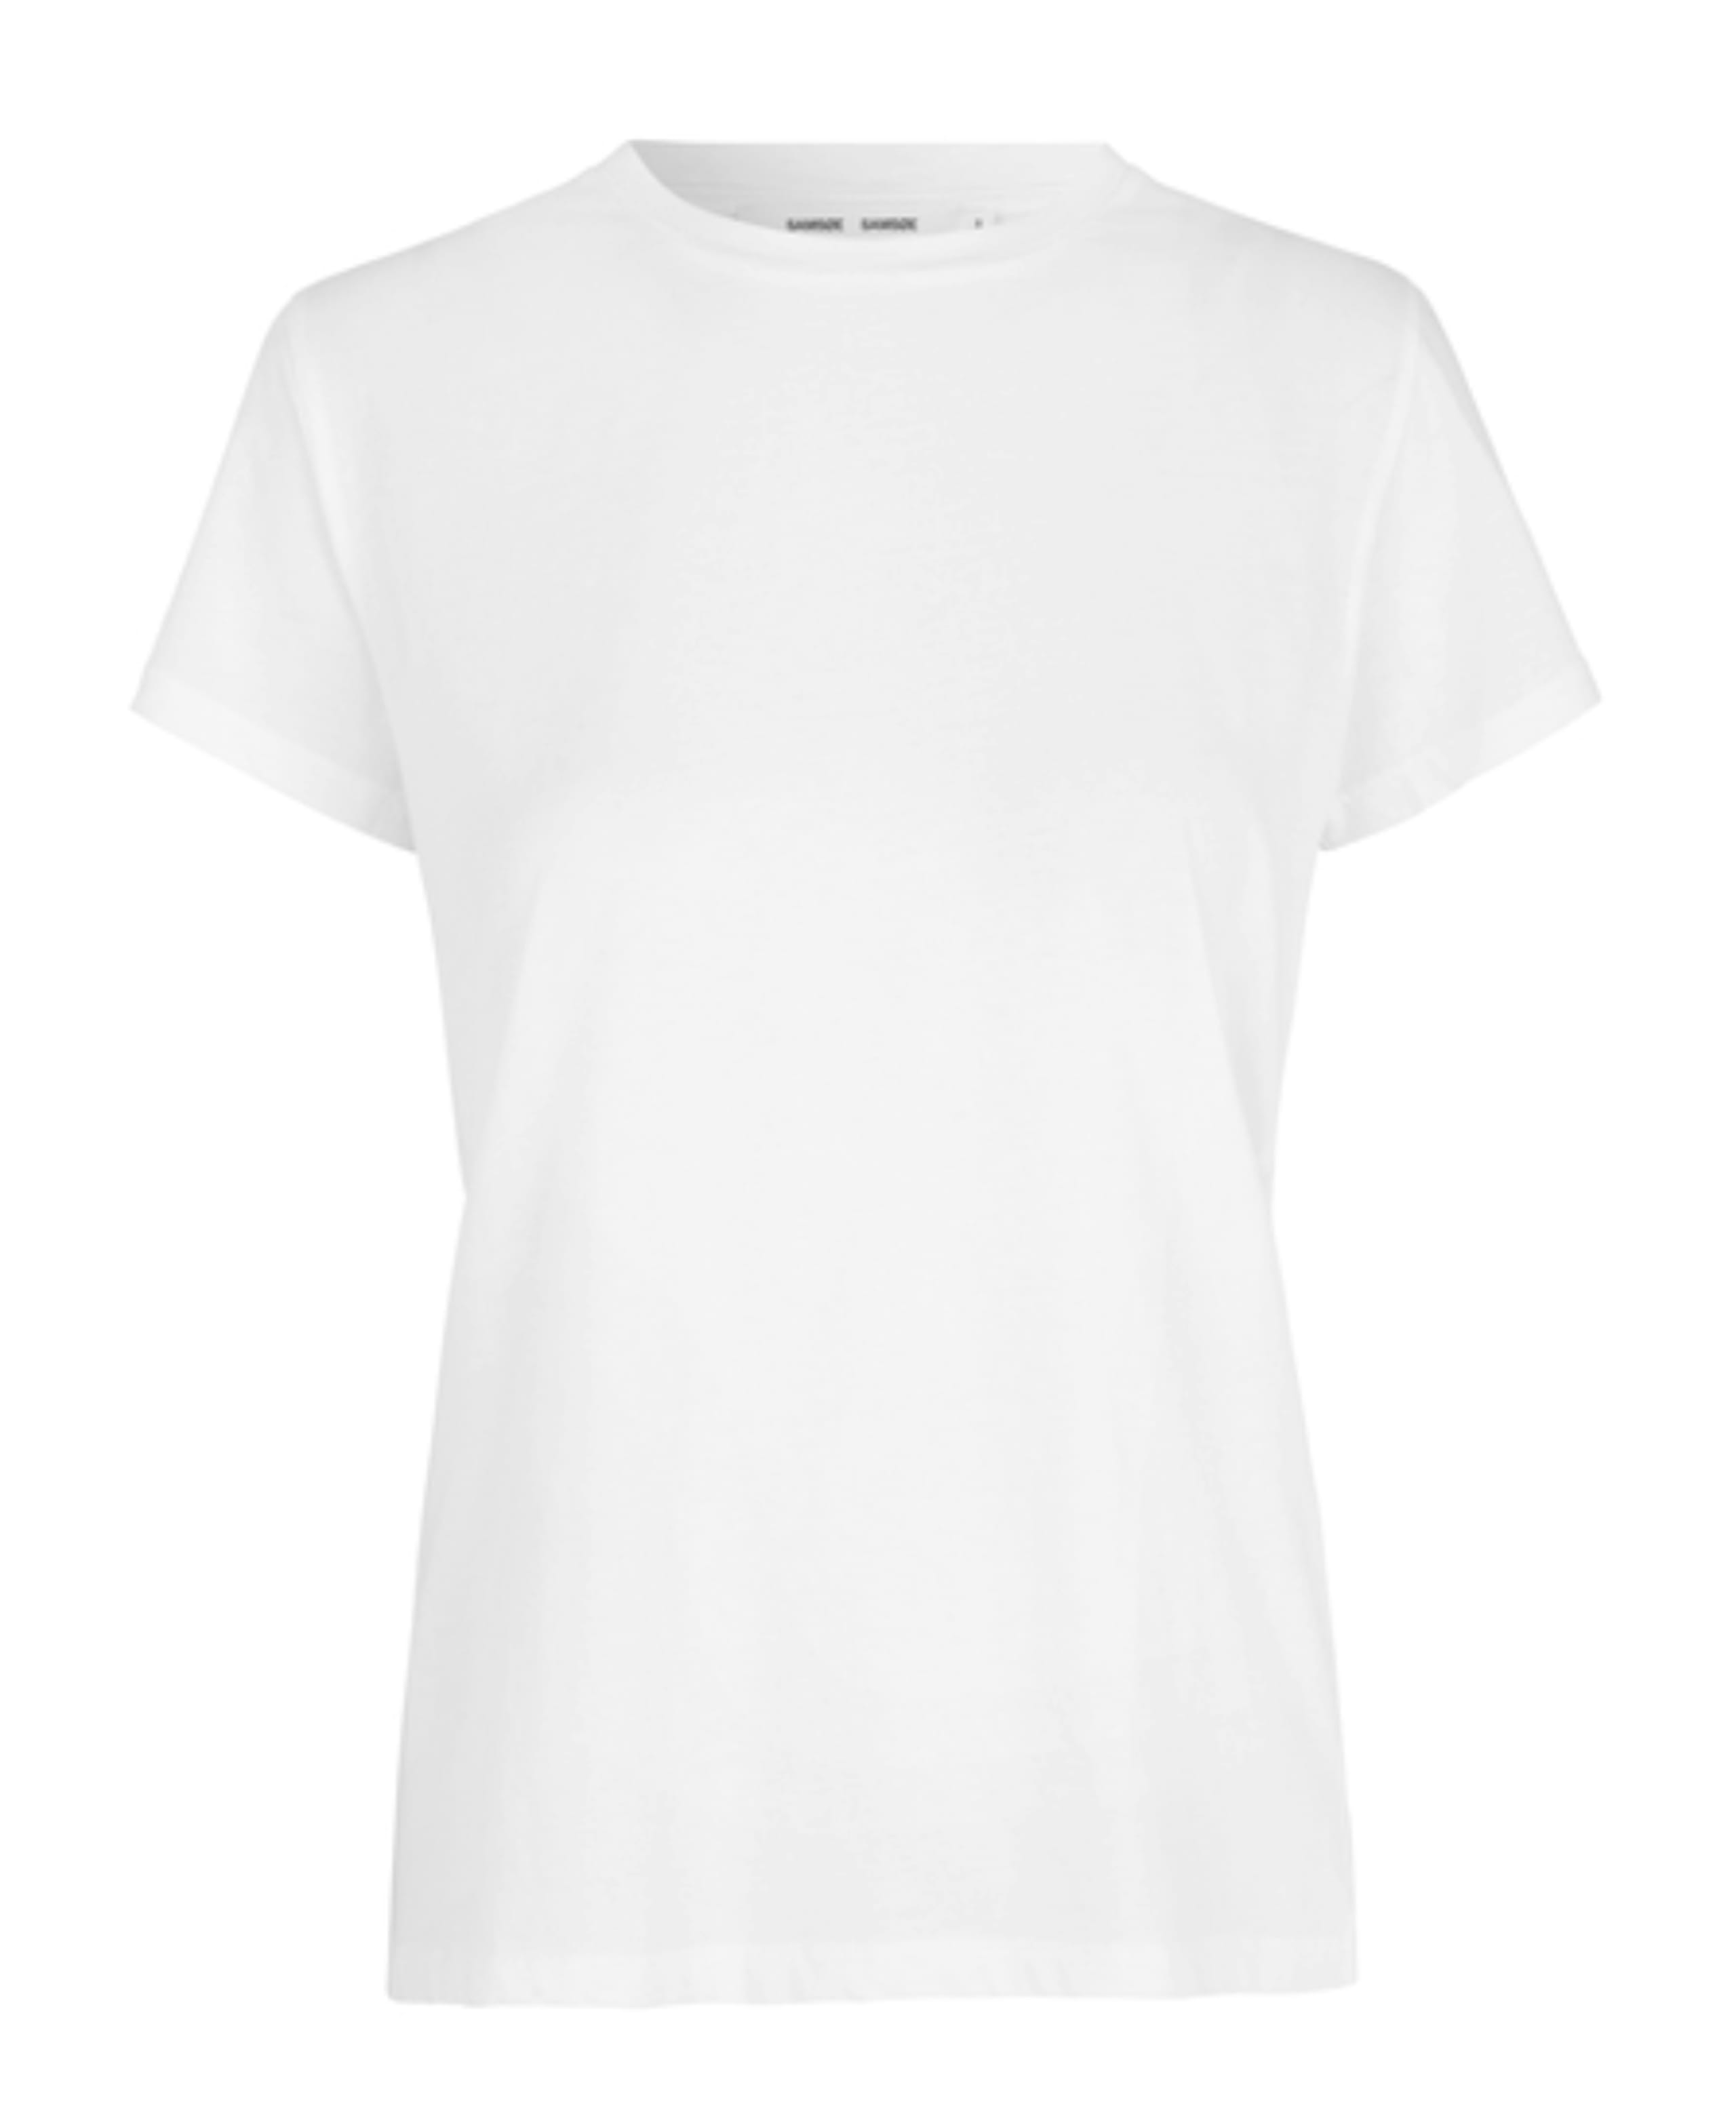 Samsøe & Samsøe - T-shirt - Solly Tee Solid - White